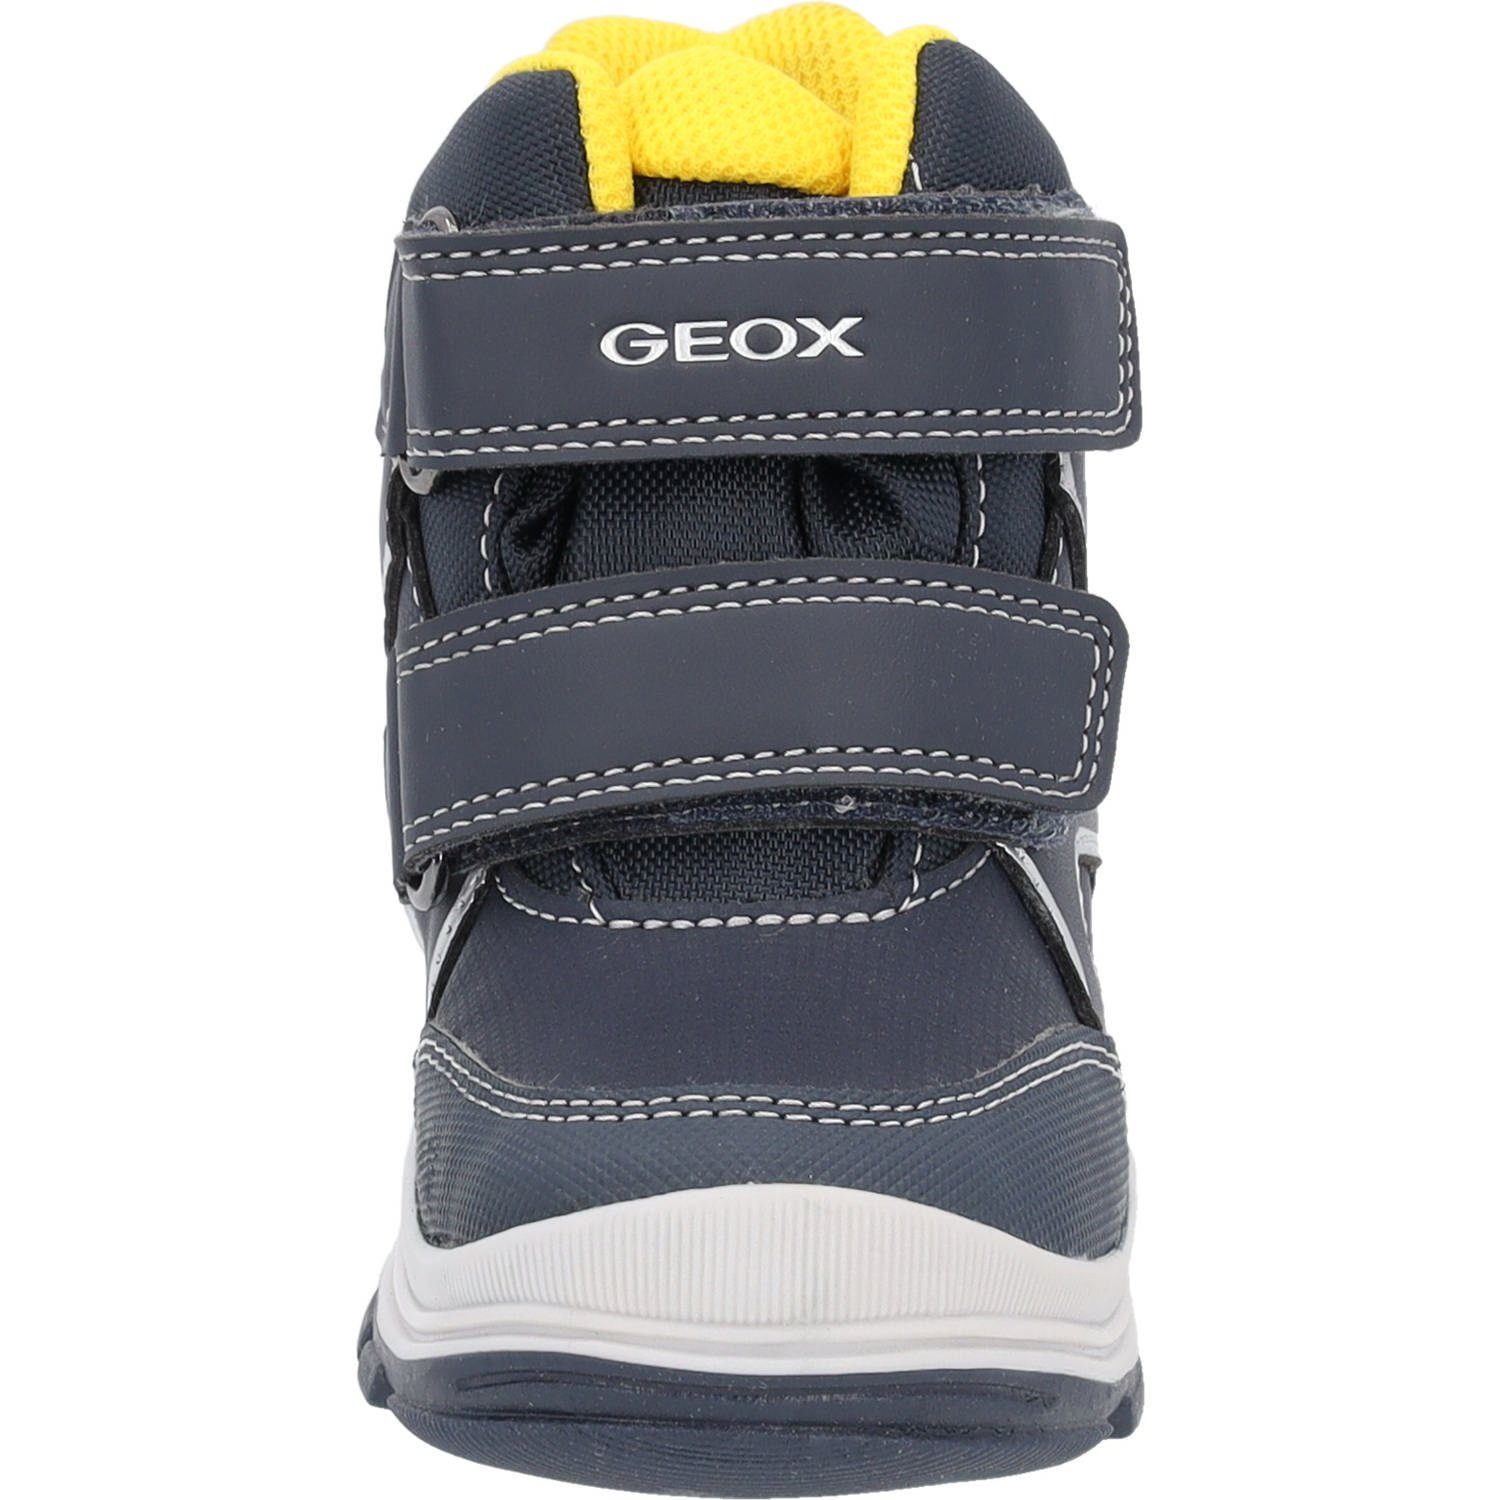 (07101986) Geox B263VD Stiefel navy/yellow Geox